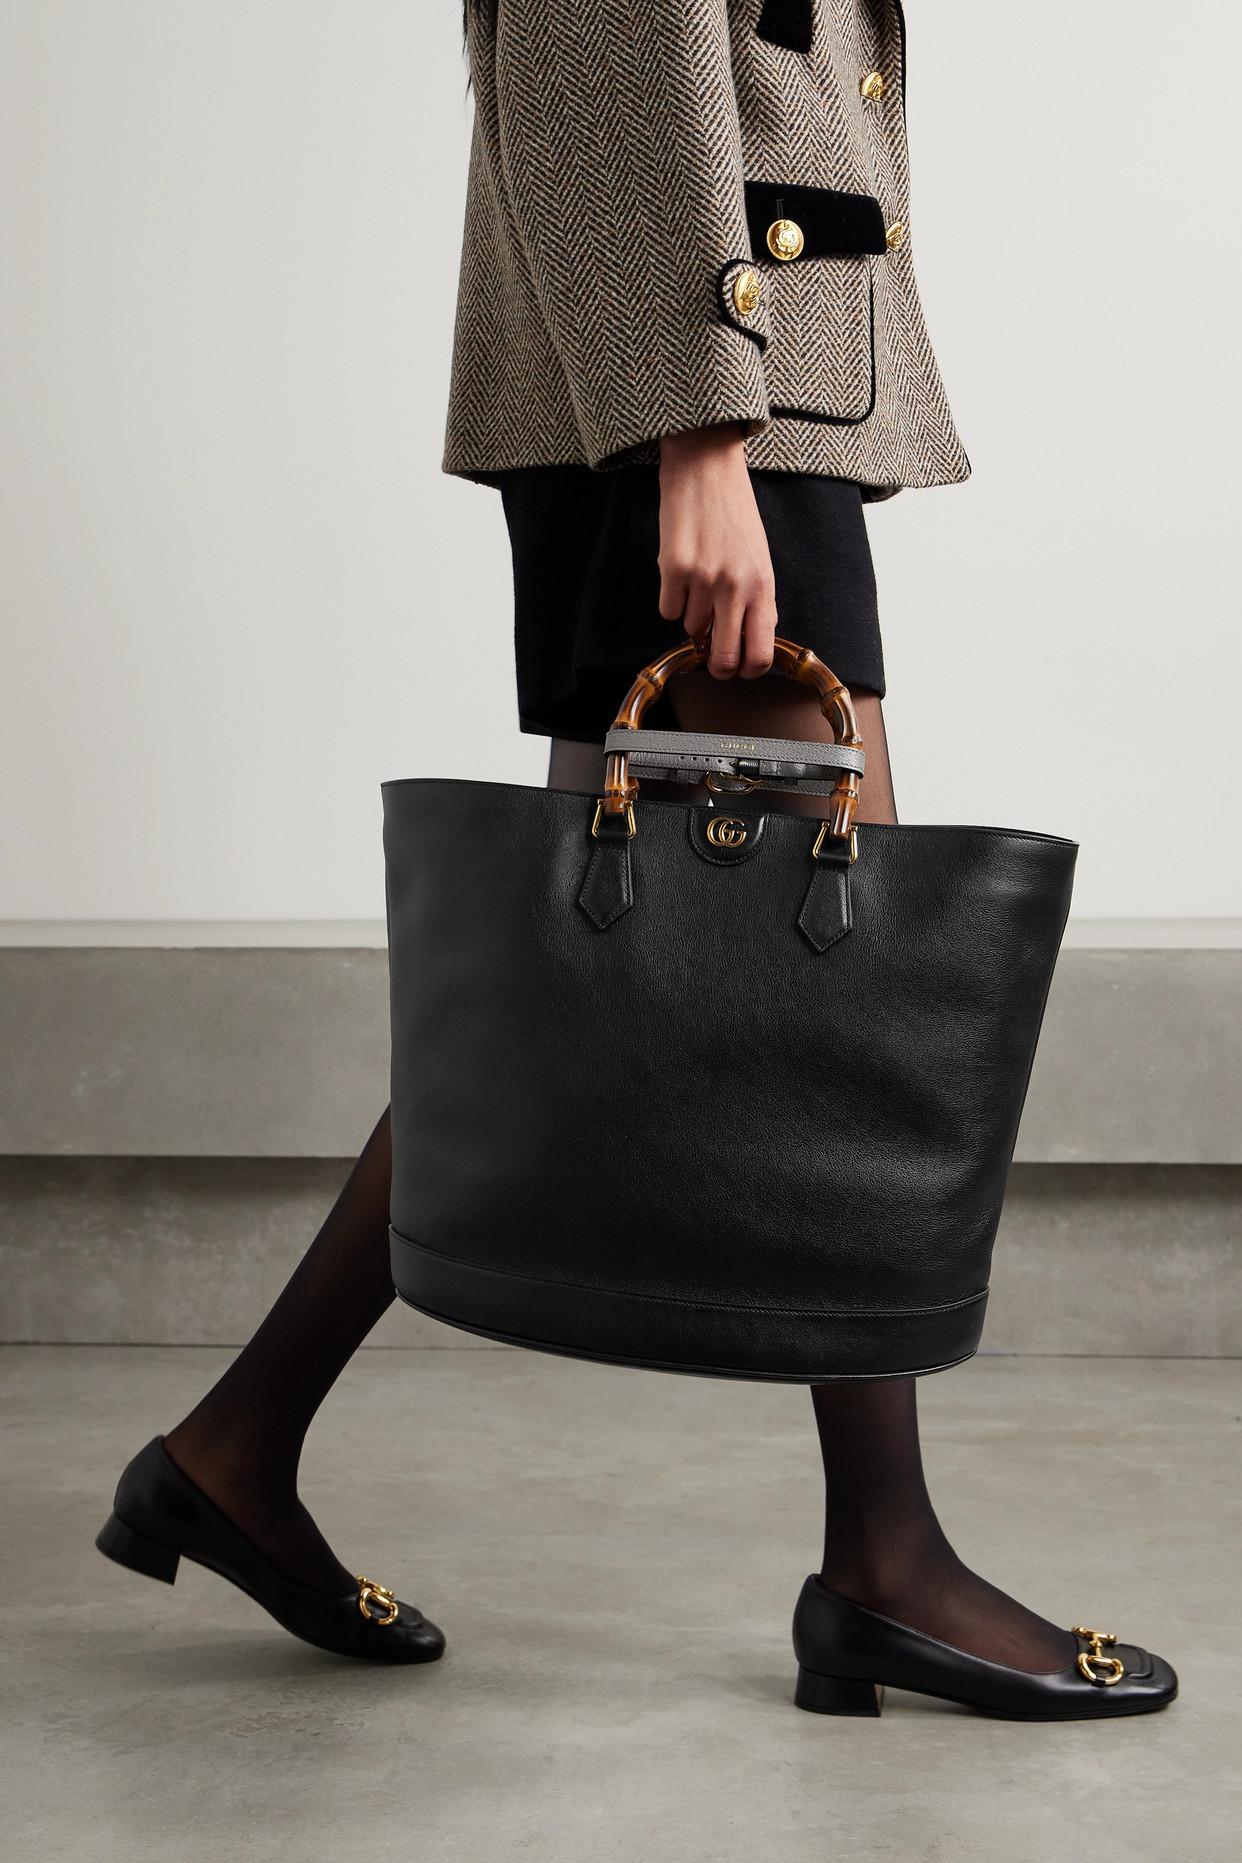 Gucci Diana medium tote bag in black leather